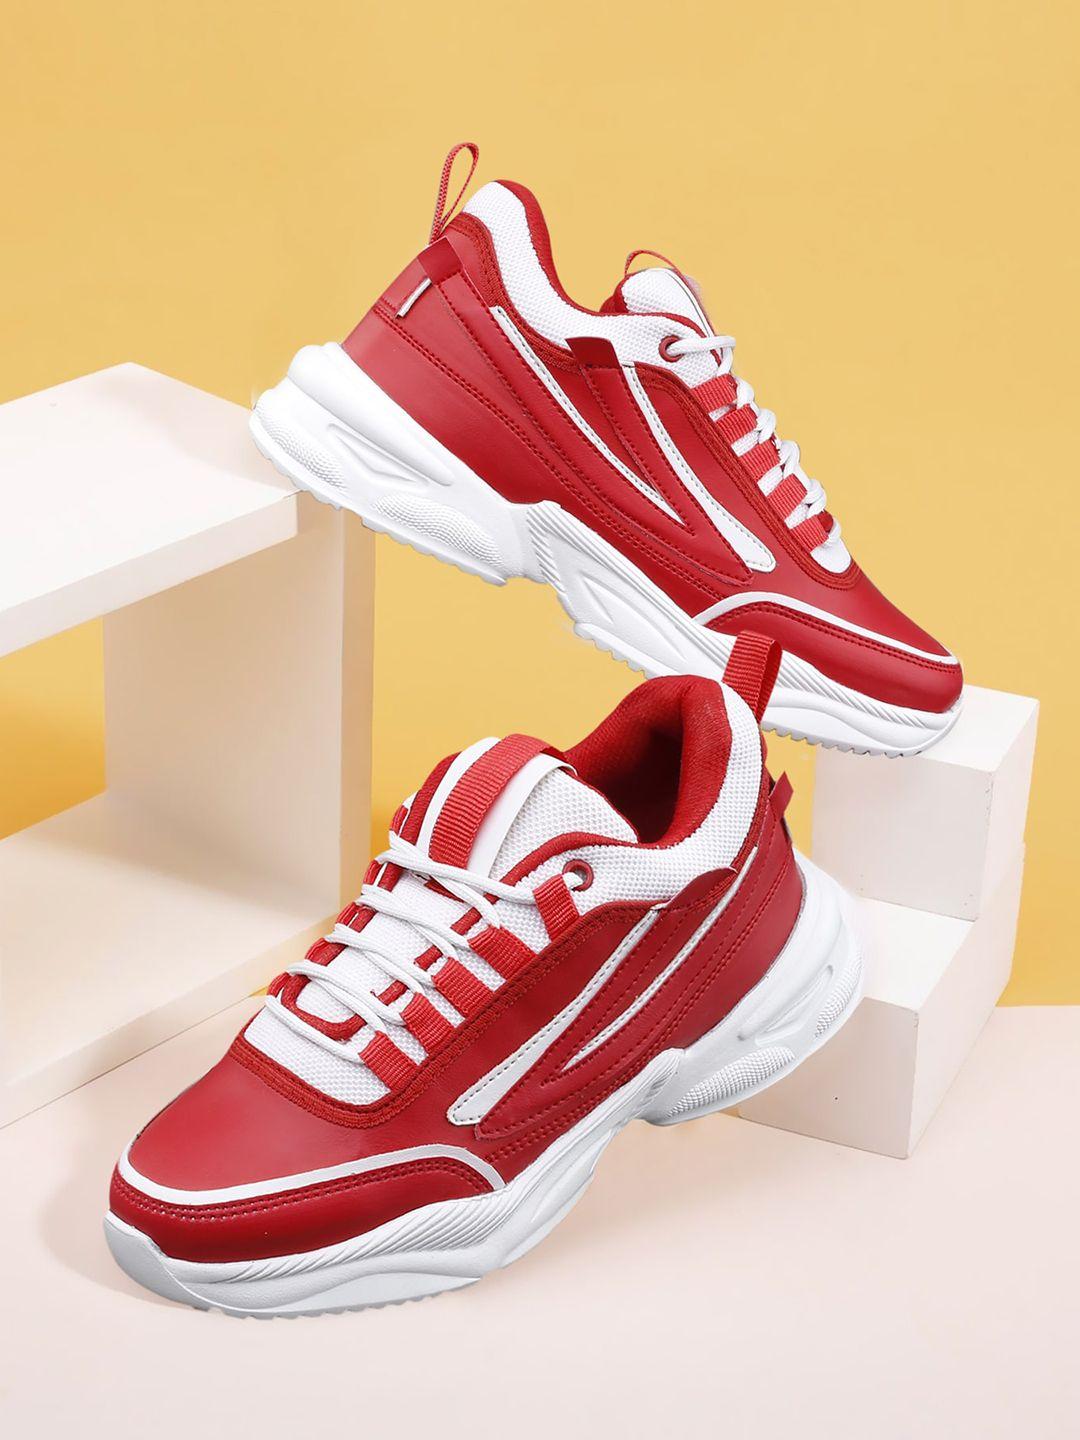 aroom-women-red-colourblocked-high-top-sneakers